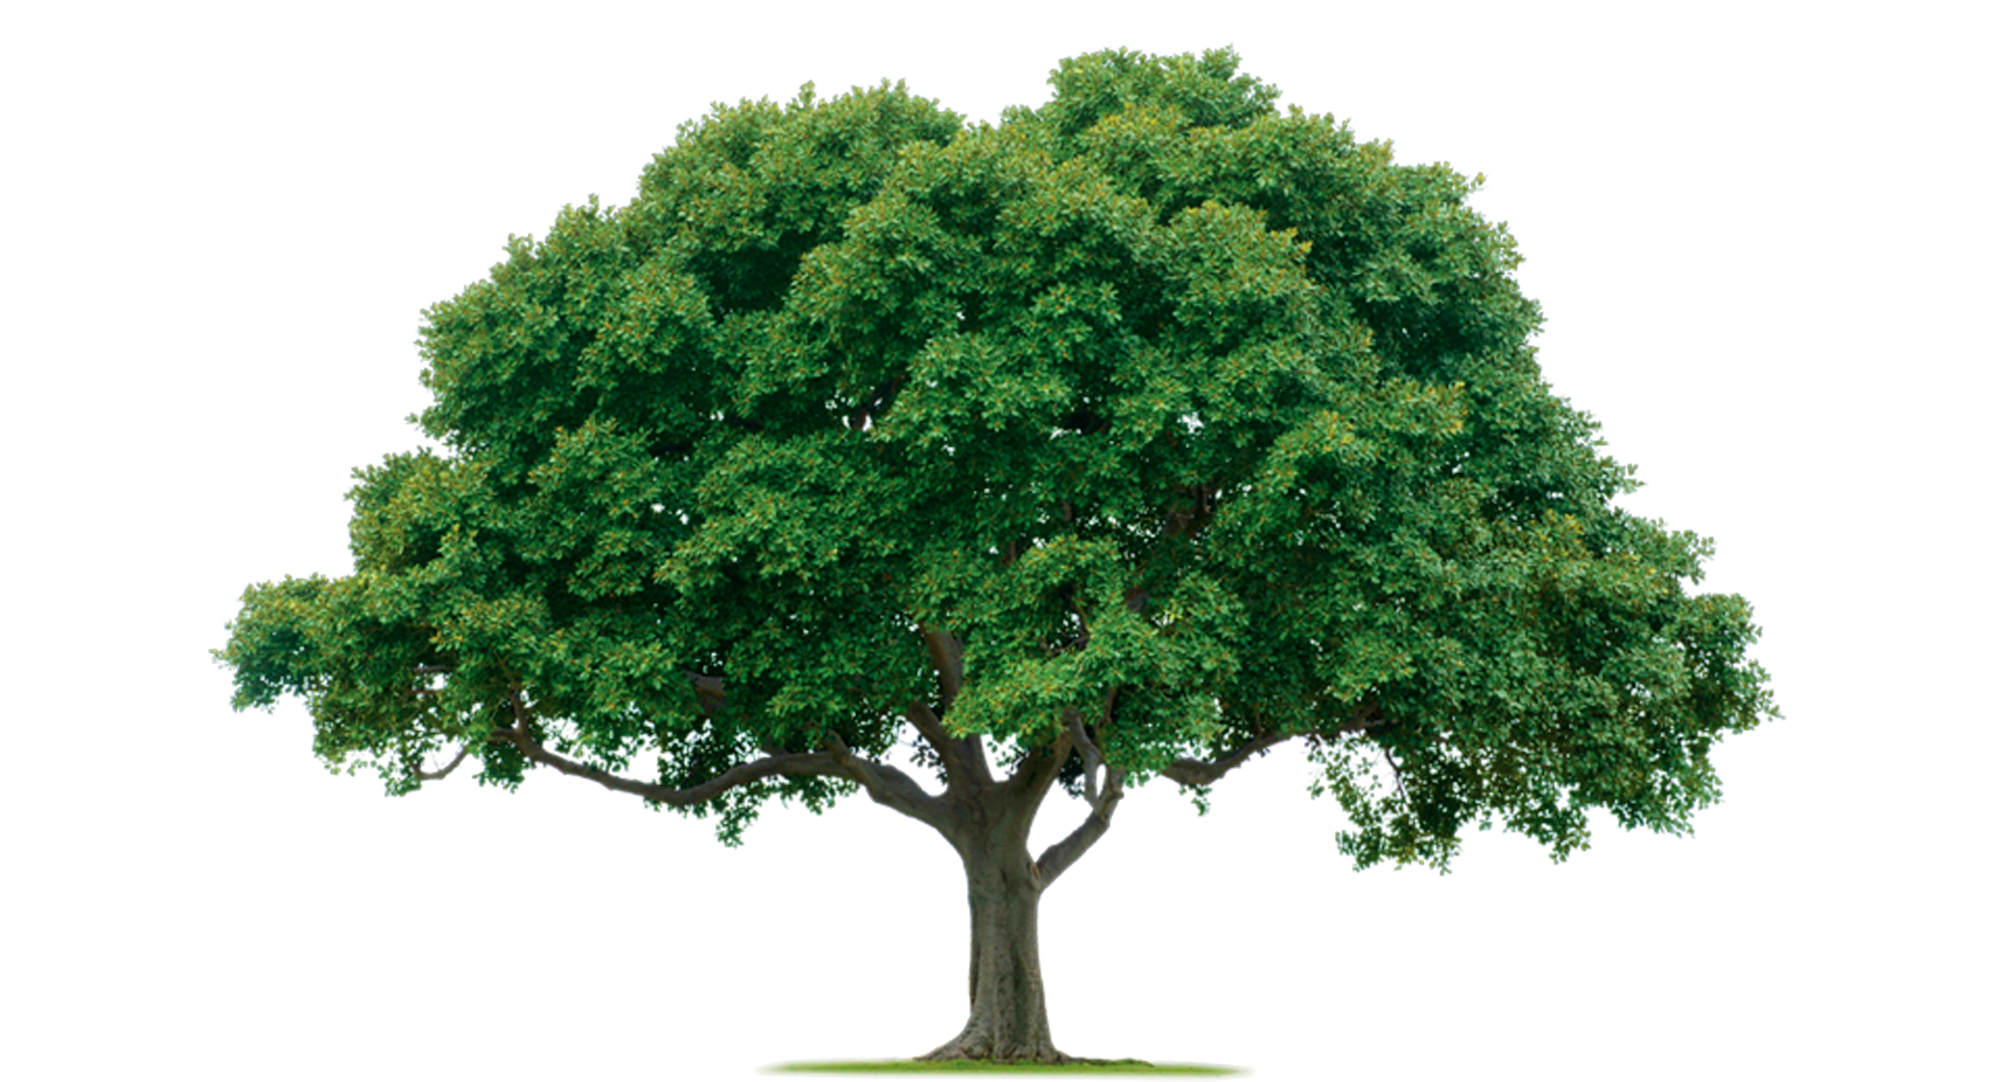 tree image